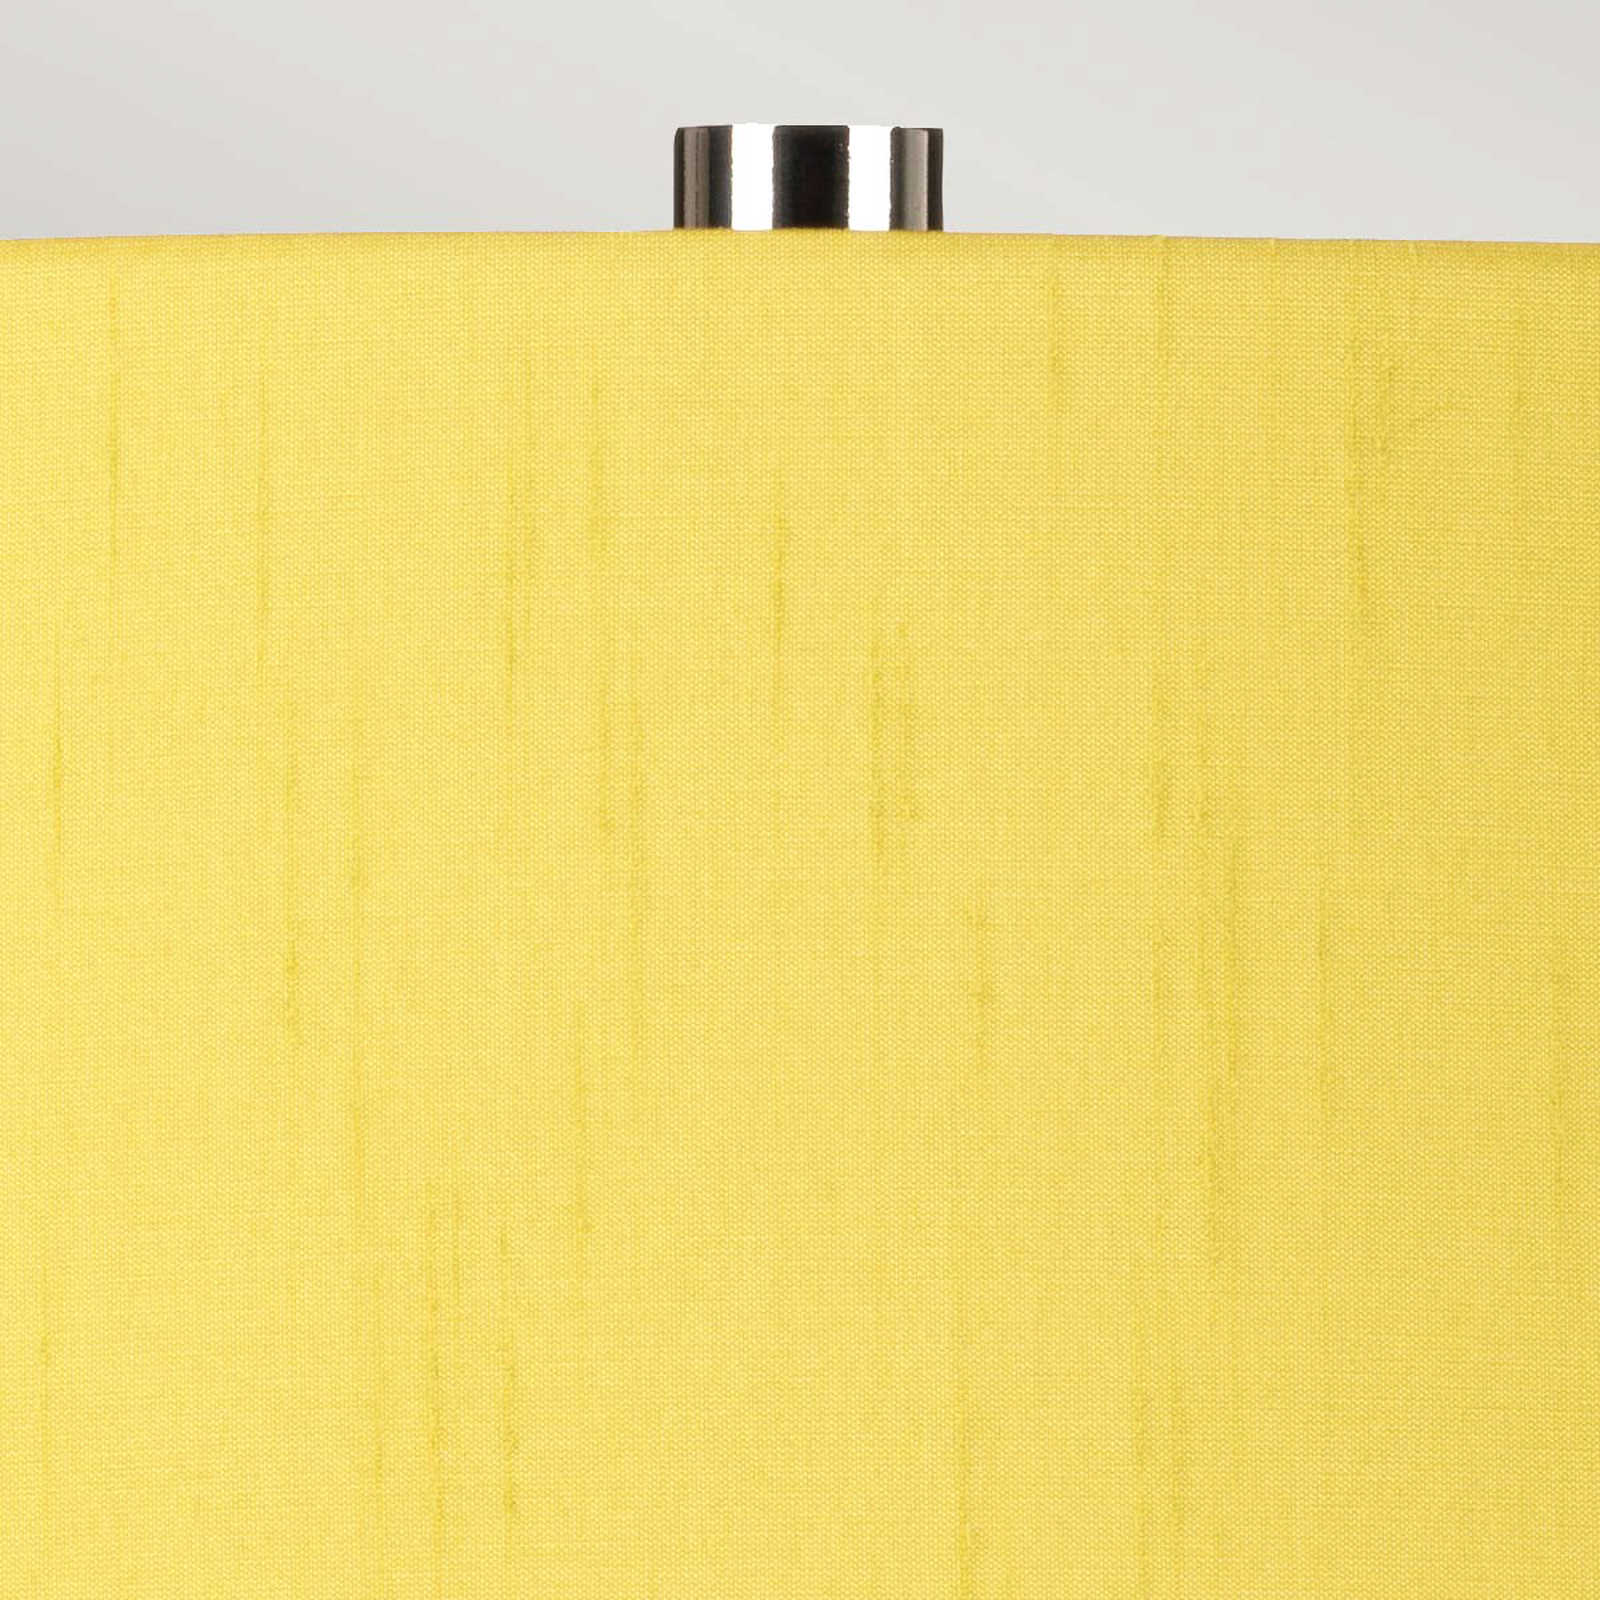 Isla fabric table lamp polished nickel/yellow